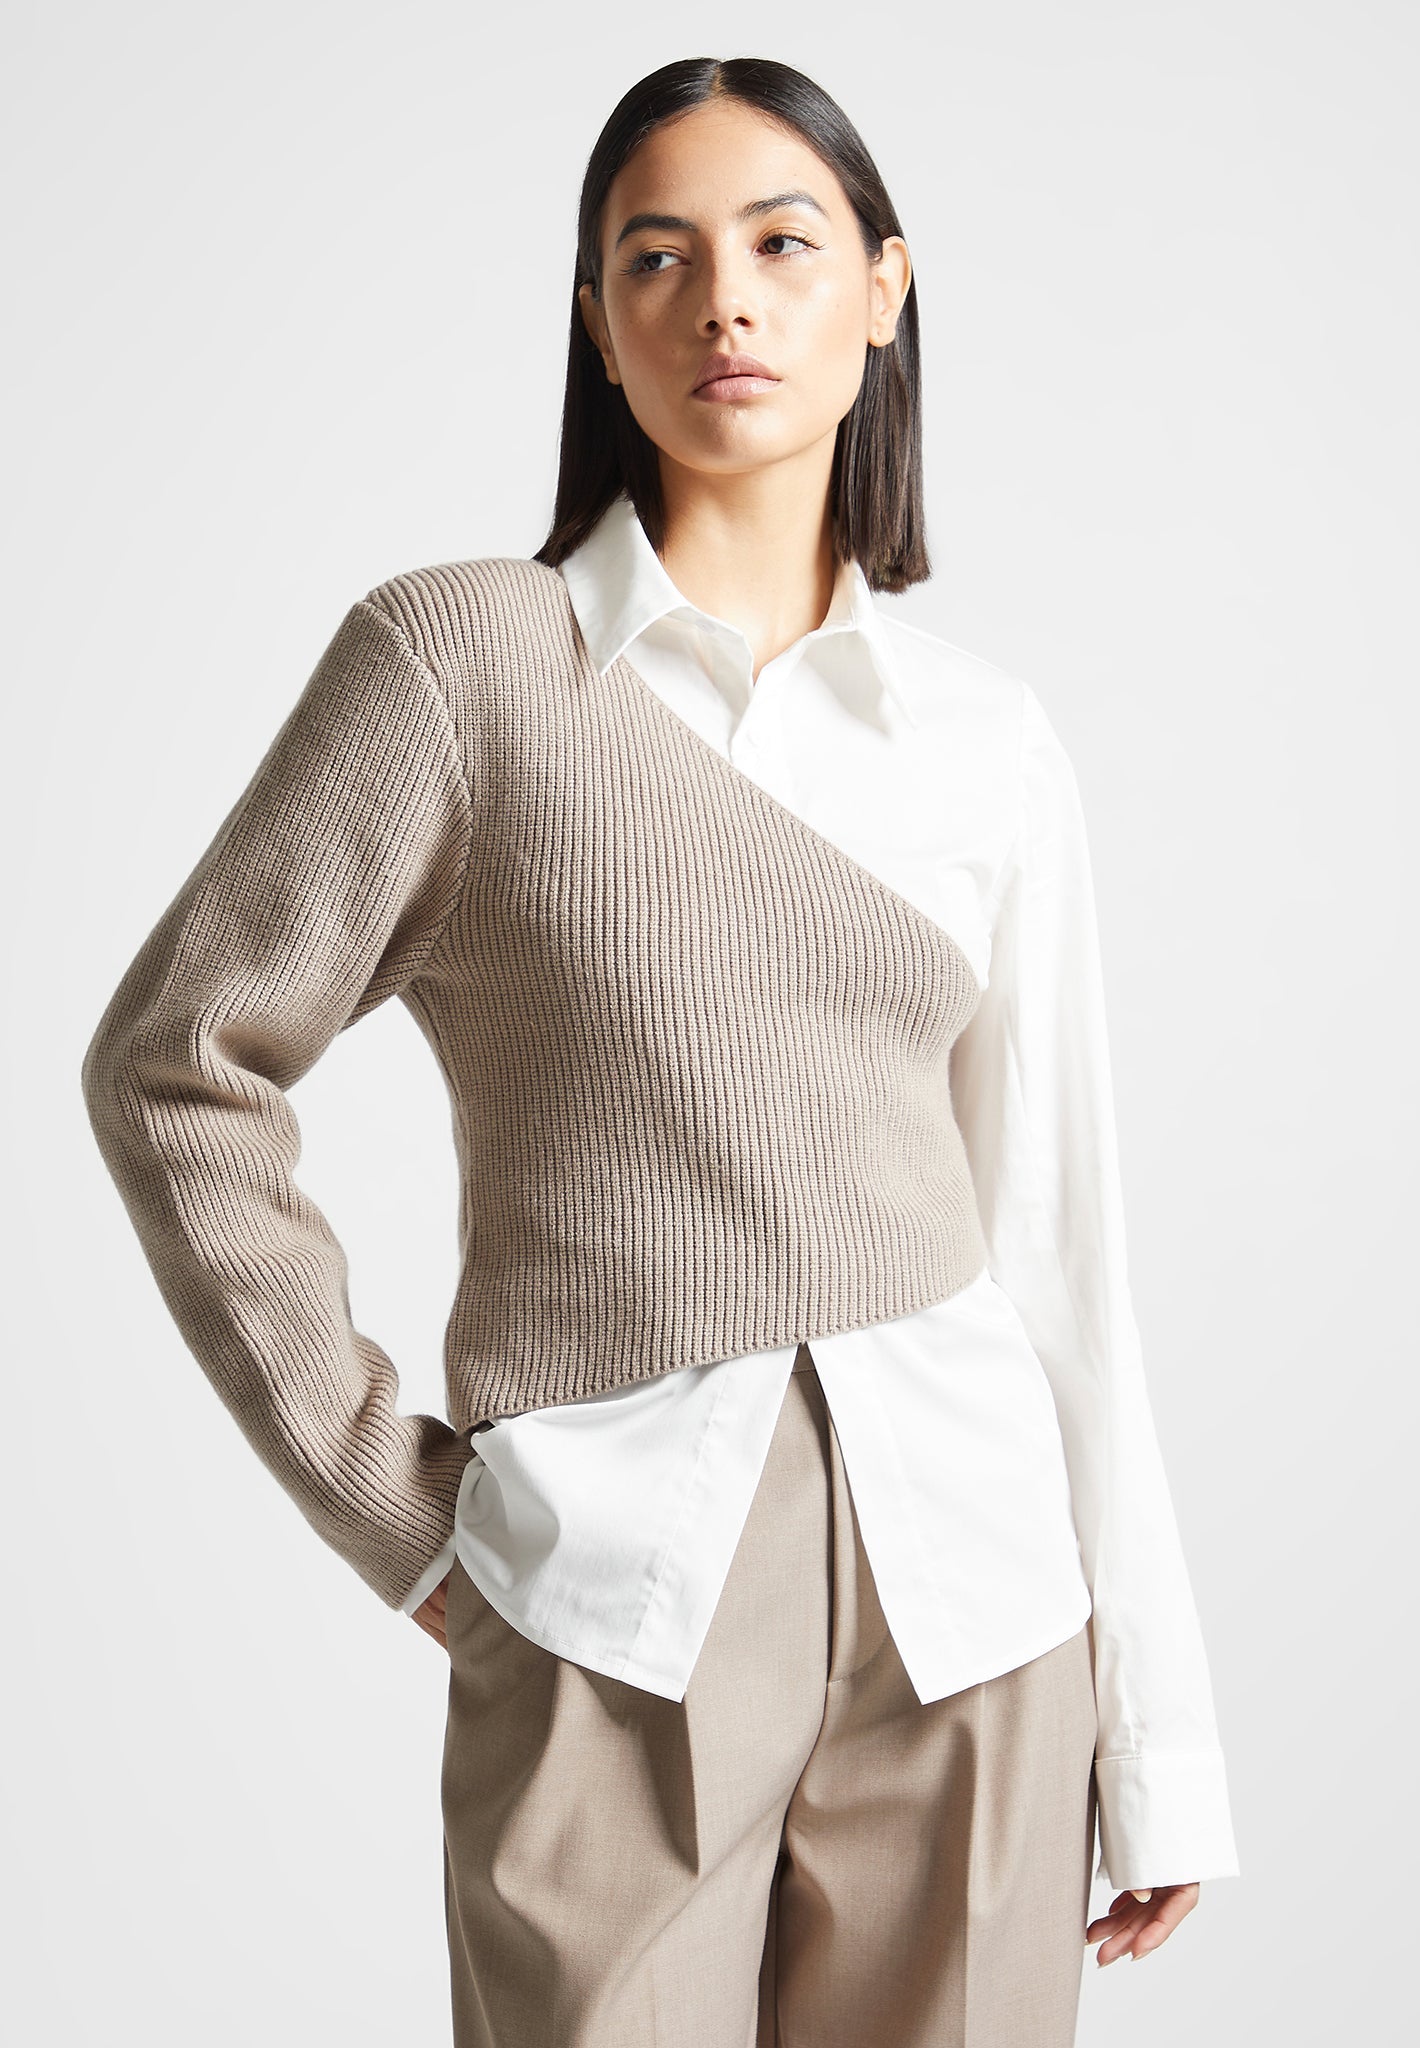 asymmetric-knitted-overlay-shirt-white-beige